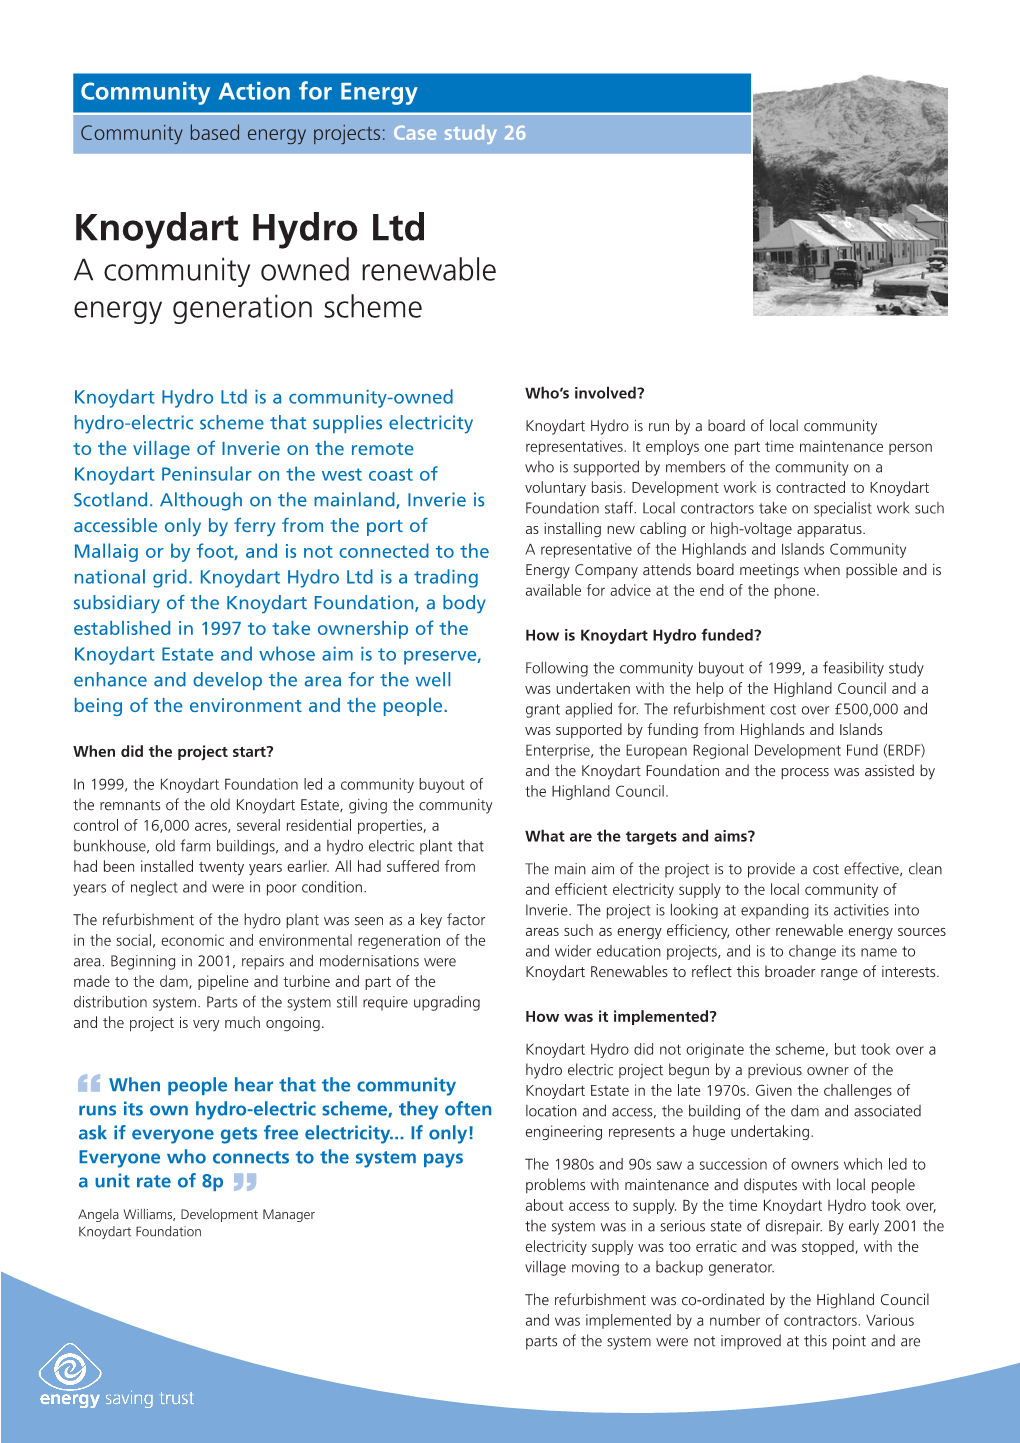 Knoydart Hydro Ltd a Community Owned Renewable Energy Generation Scheme